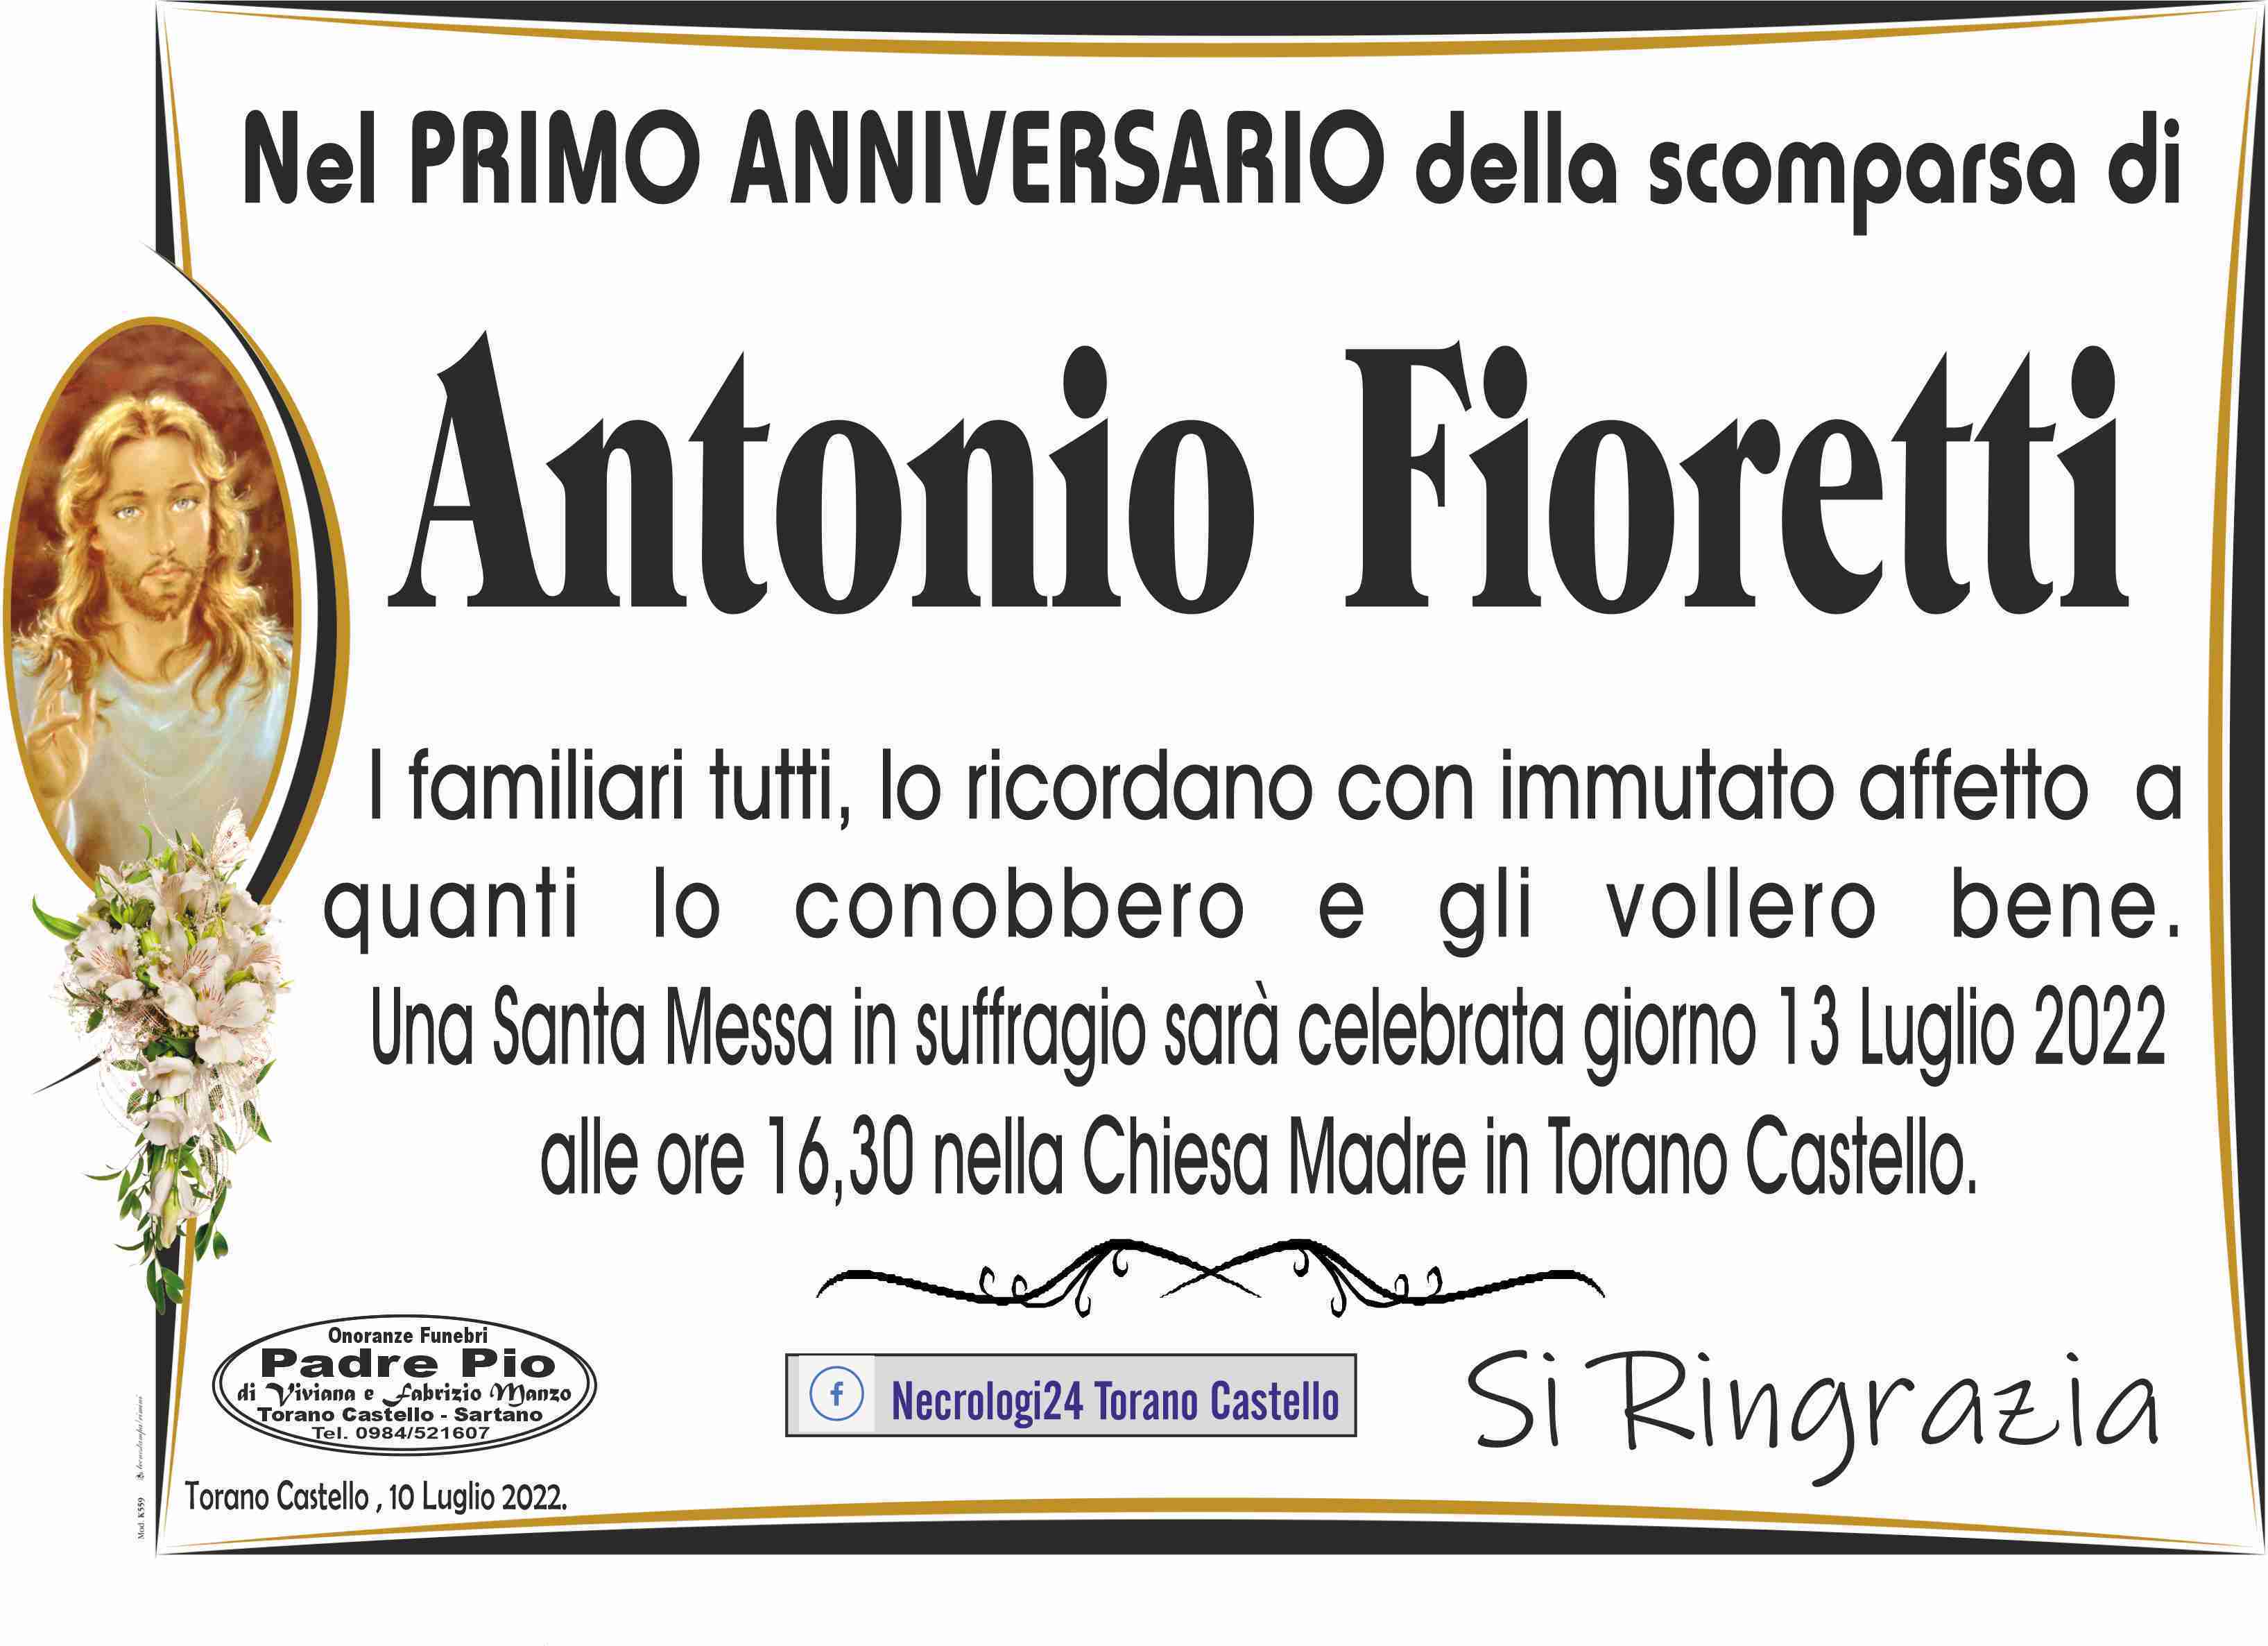 Antonio Fioretti